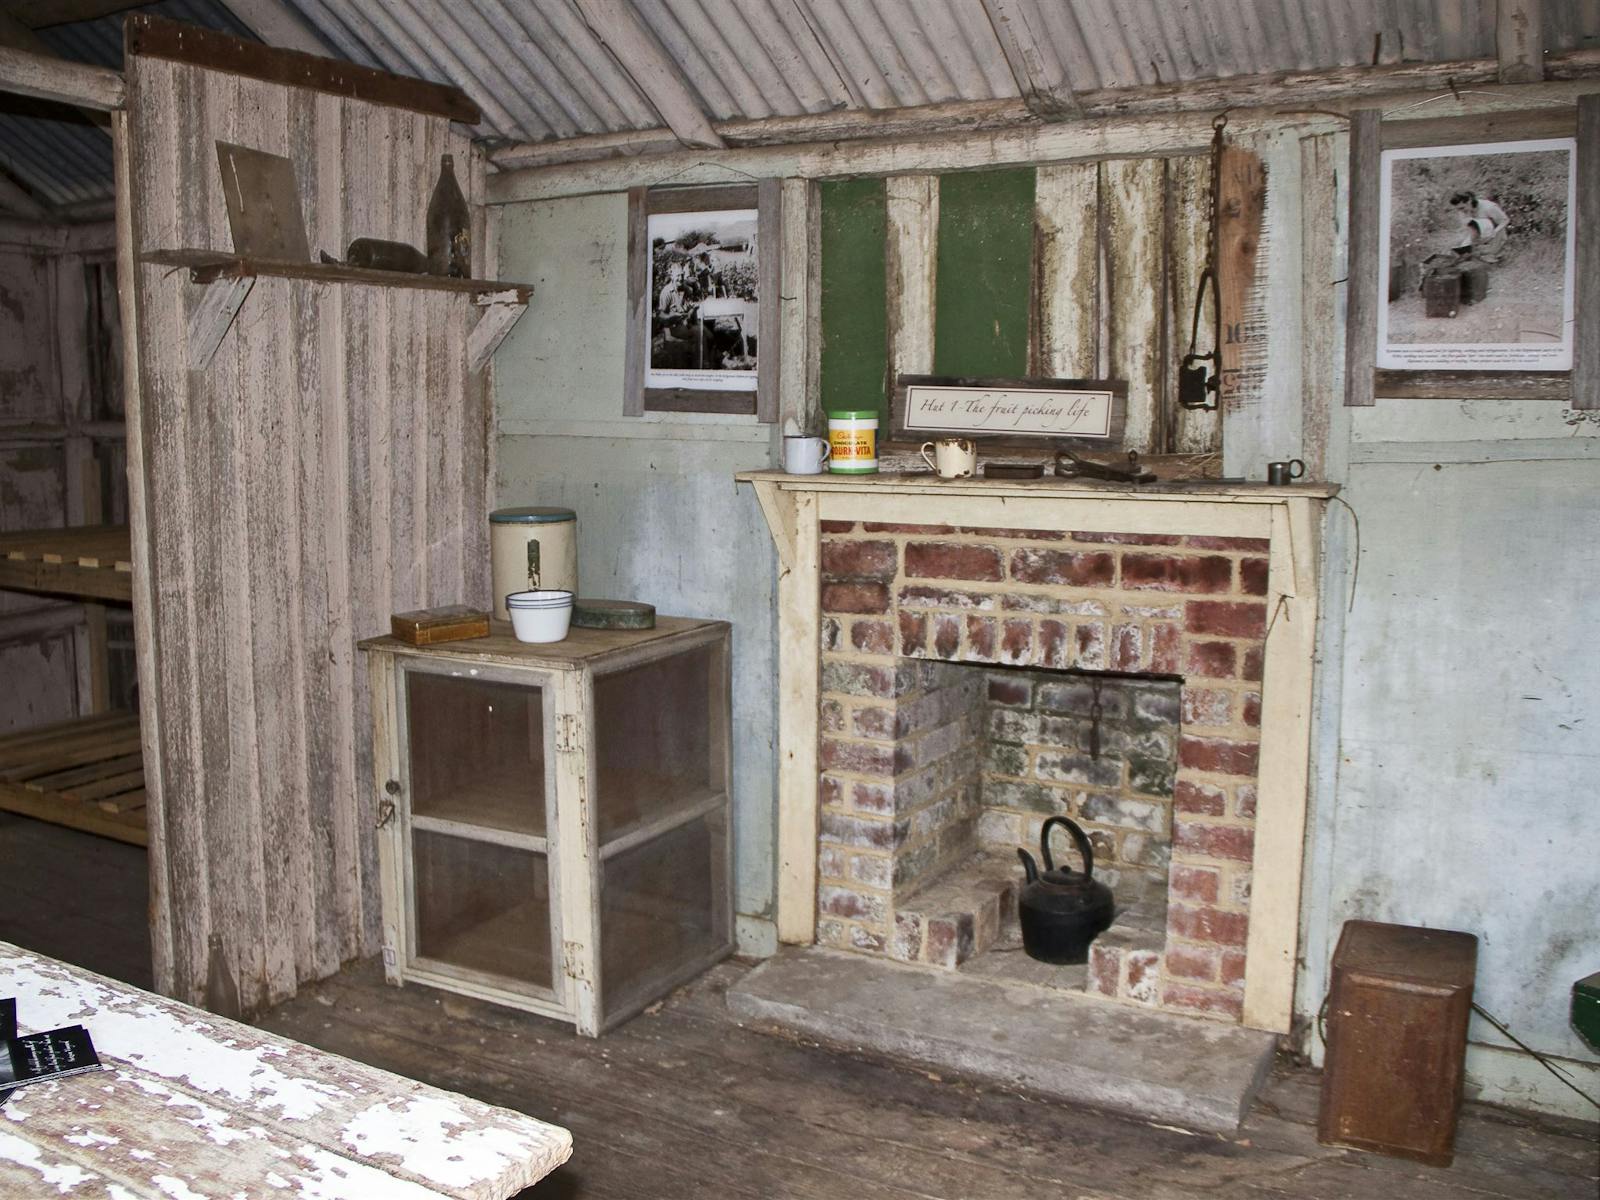 Interior of Pickers Hut